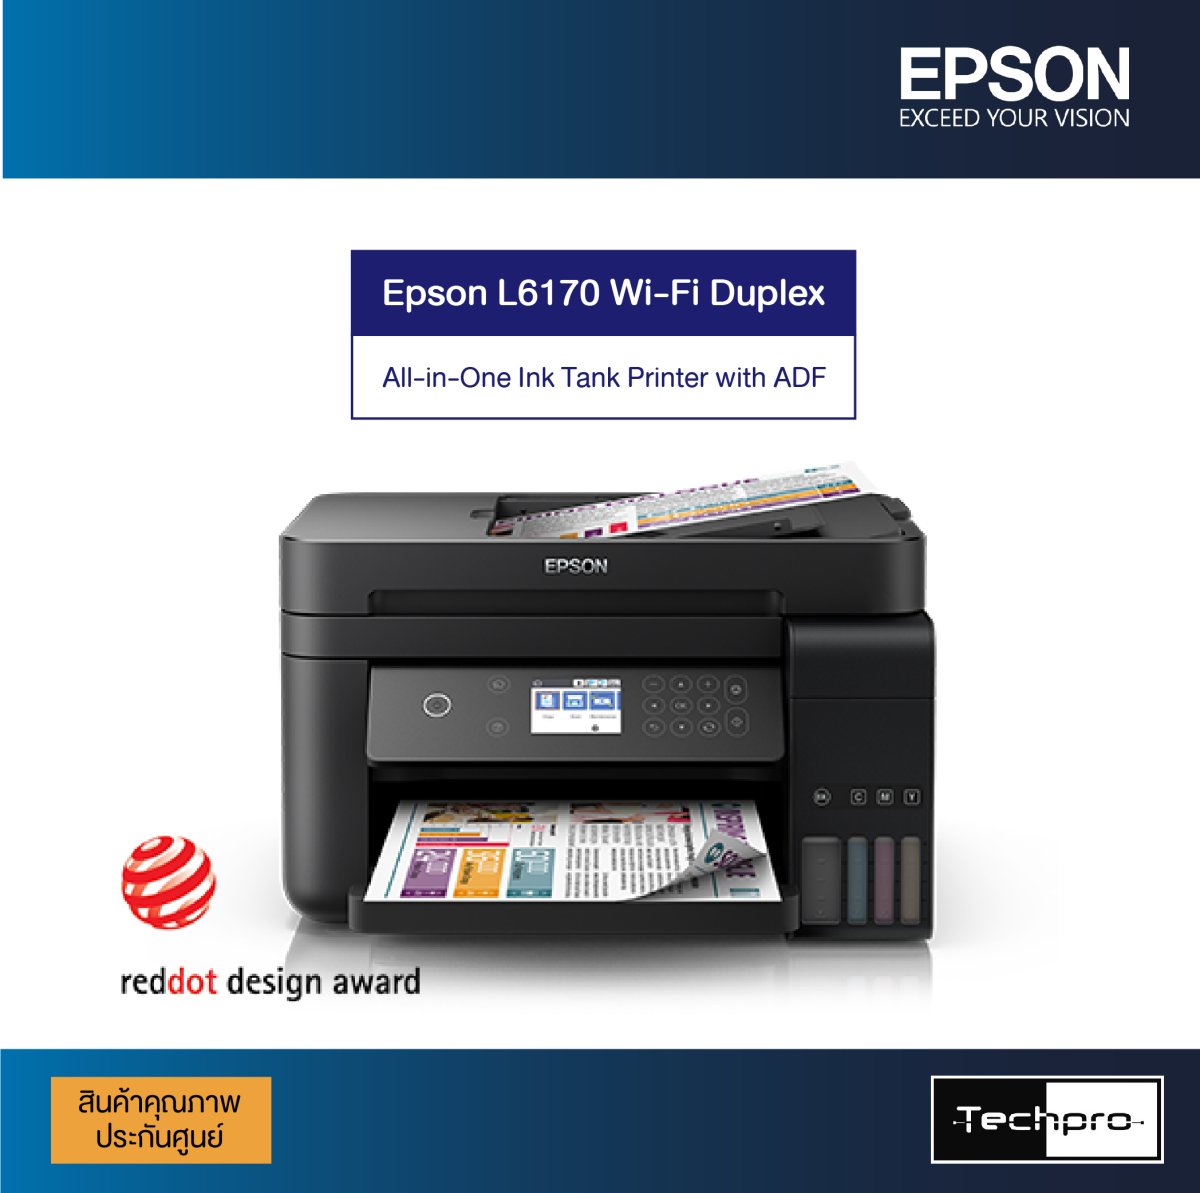 Epson L6170 Wi Fi Duplex All In One Ink Tank Printer Techpro 3993